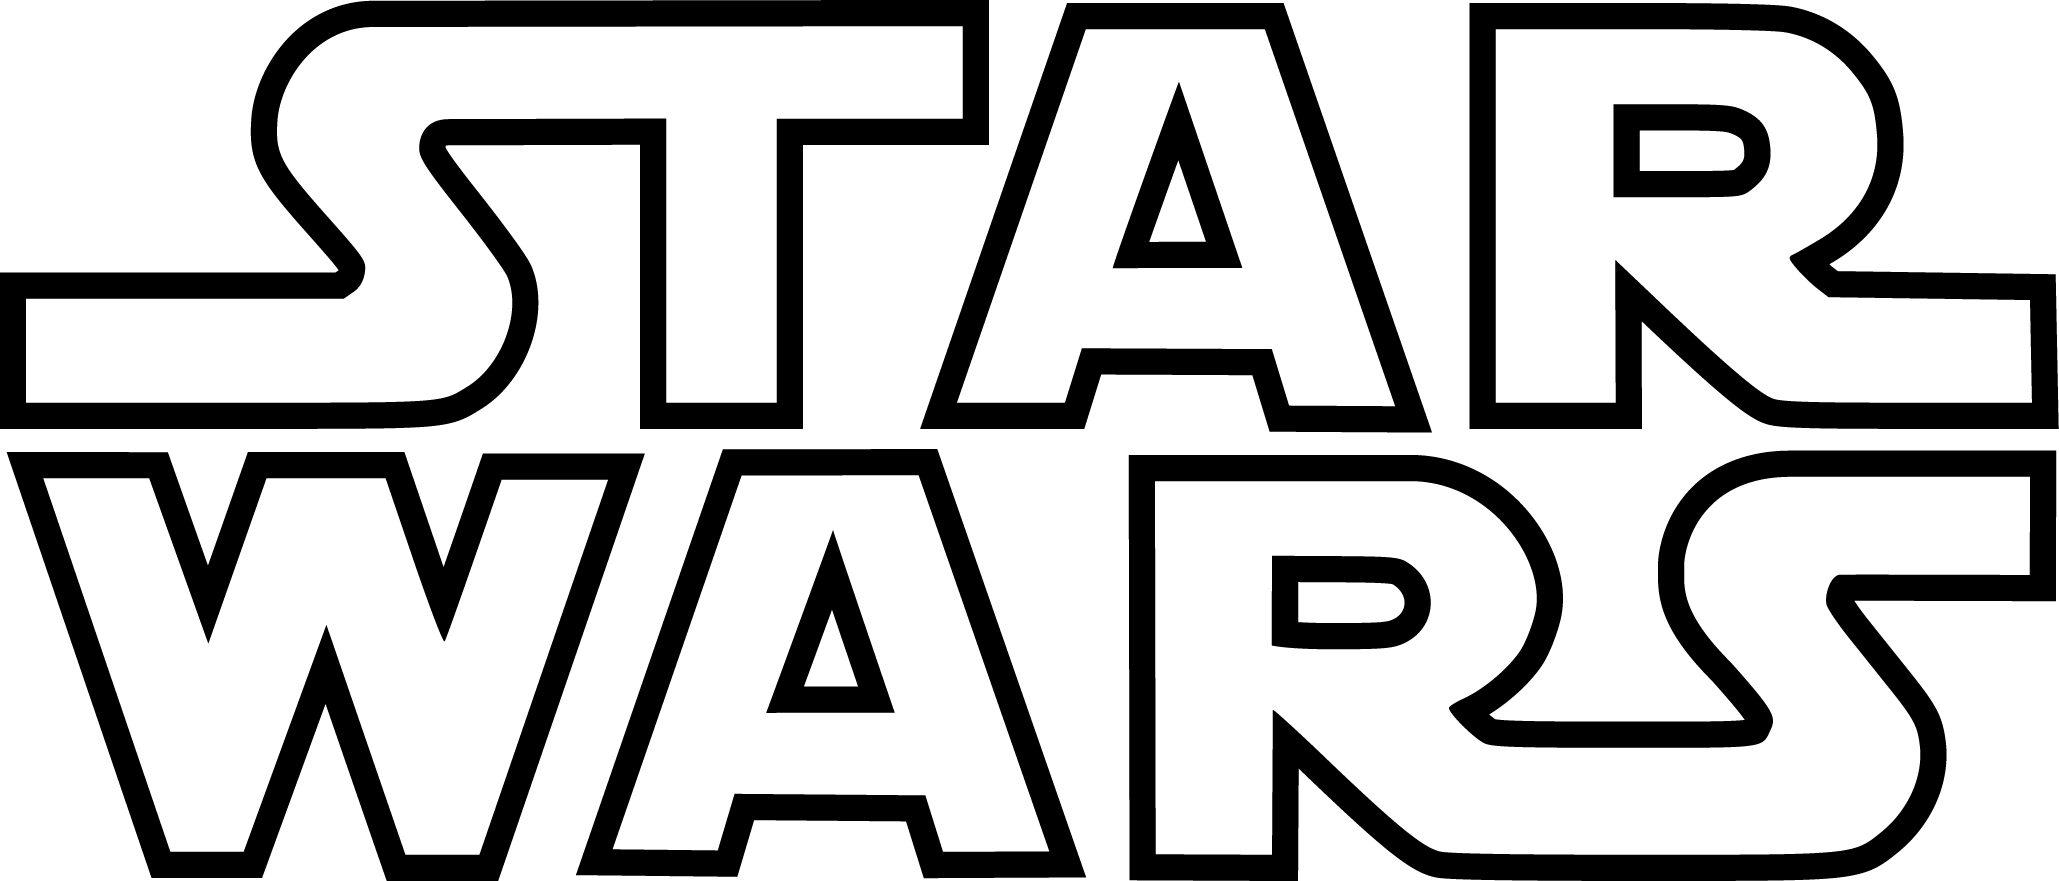 Star Wars Black and White Logo - star-wars-logo - Free Downloads Graphic Design Materials